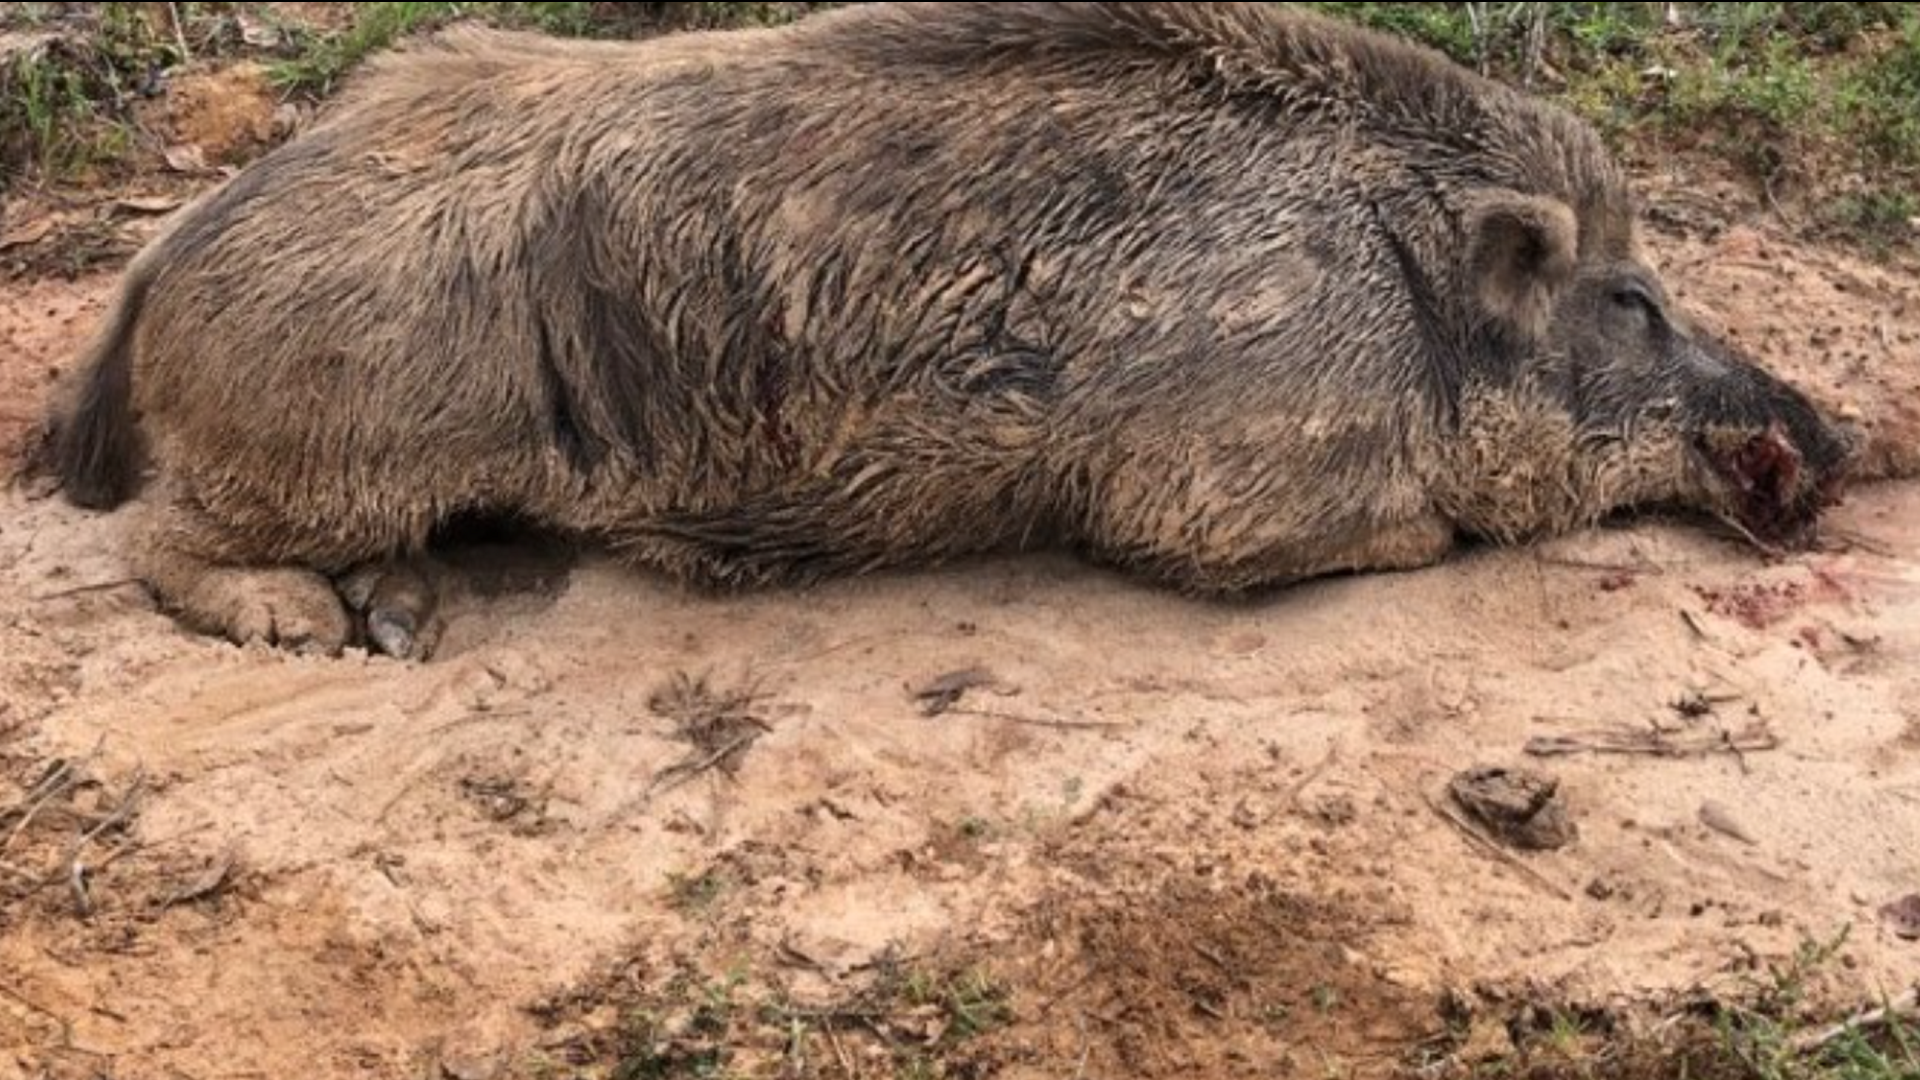 Feral hogs cost South Carolina farmers $115 million a year in damages, according to the South Carolina Farm Bureau.